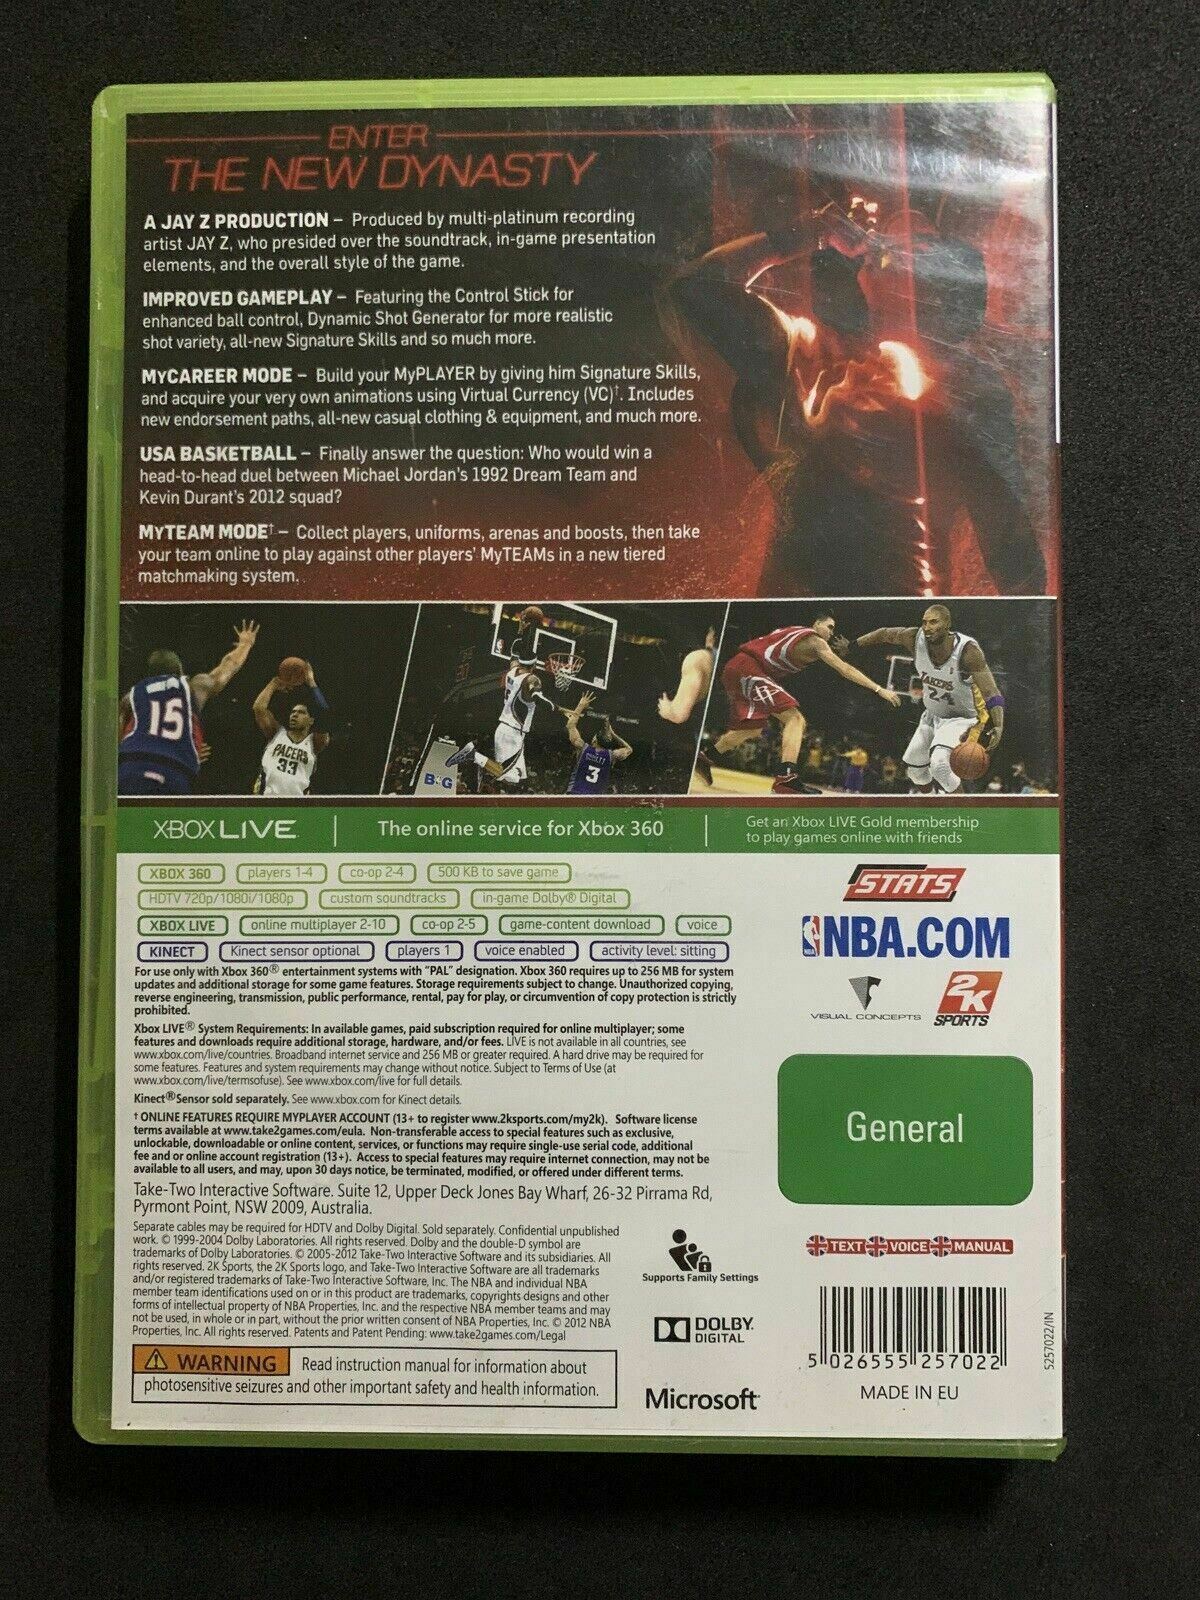 NBA 2K13 - Microsoft XBOX 360 Official NBA Basketball Game